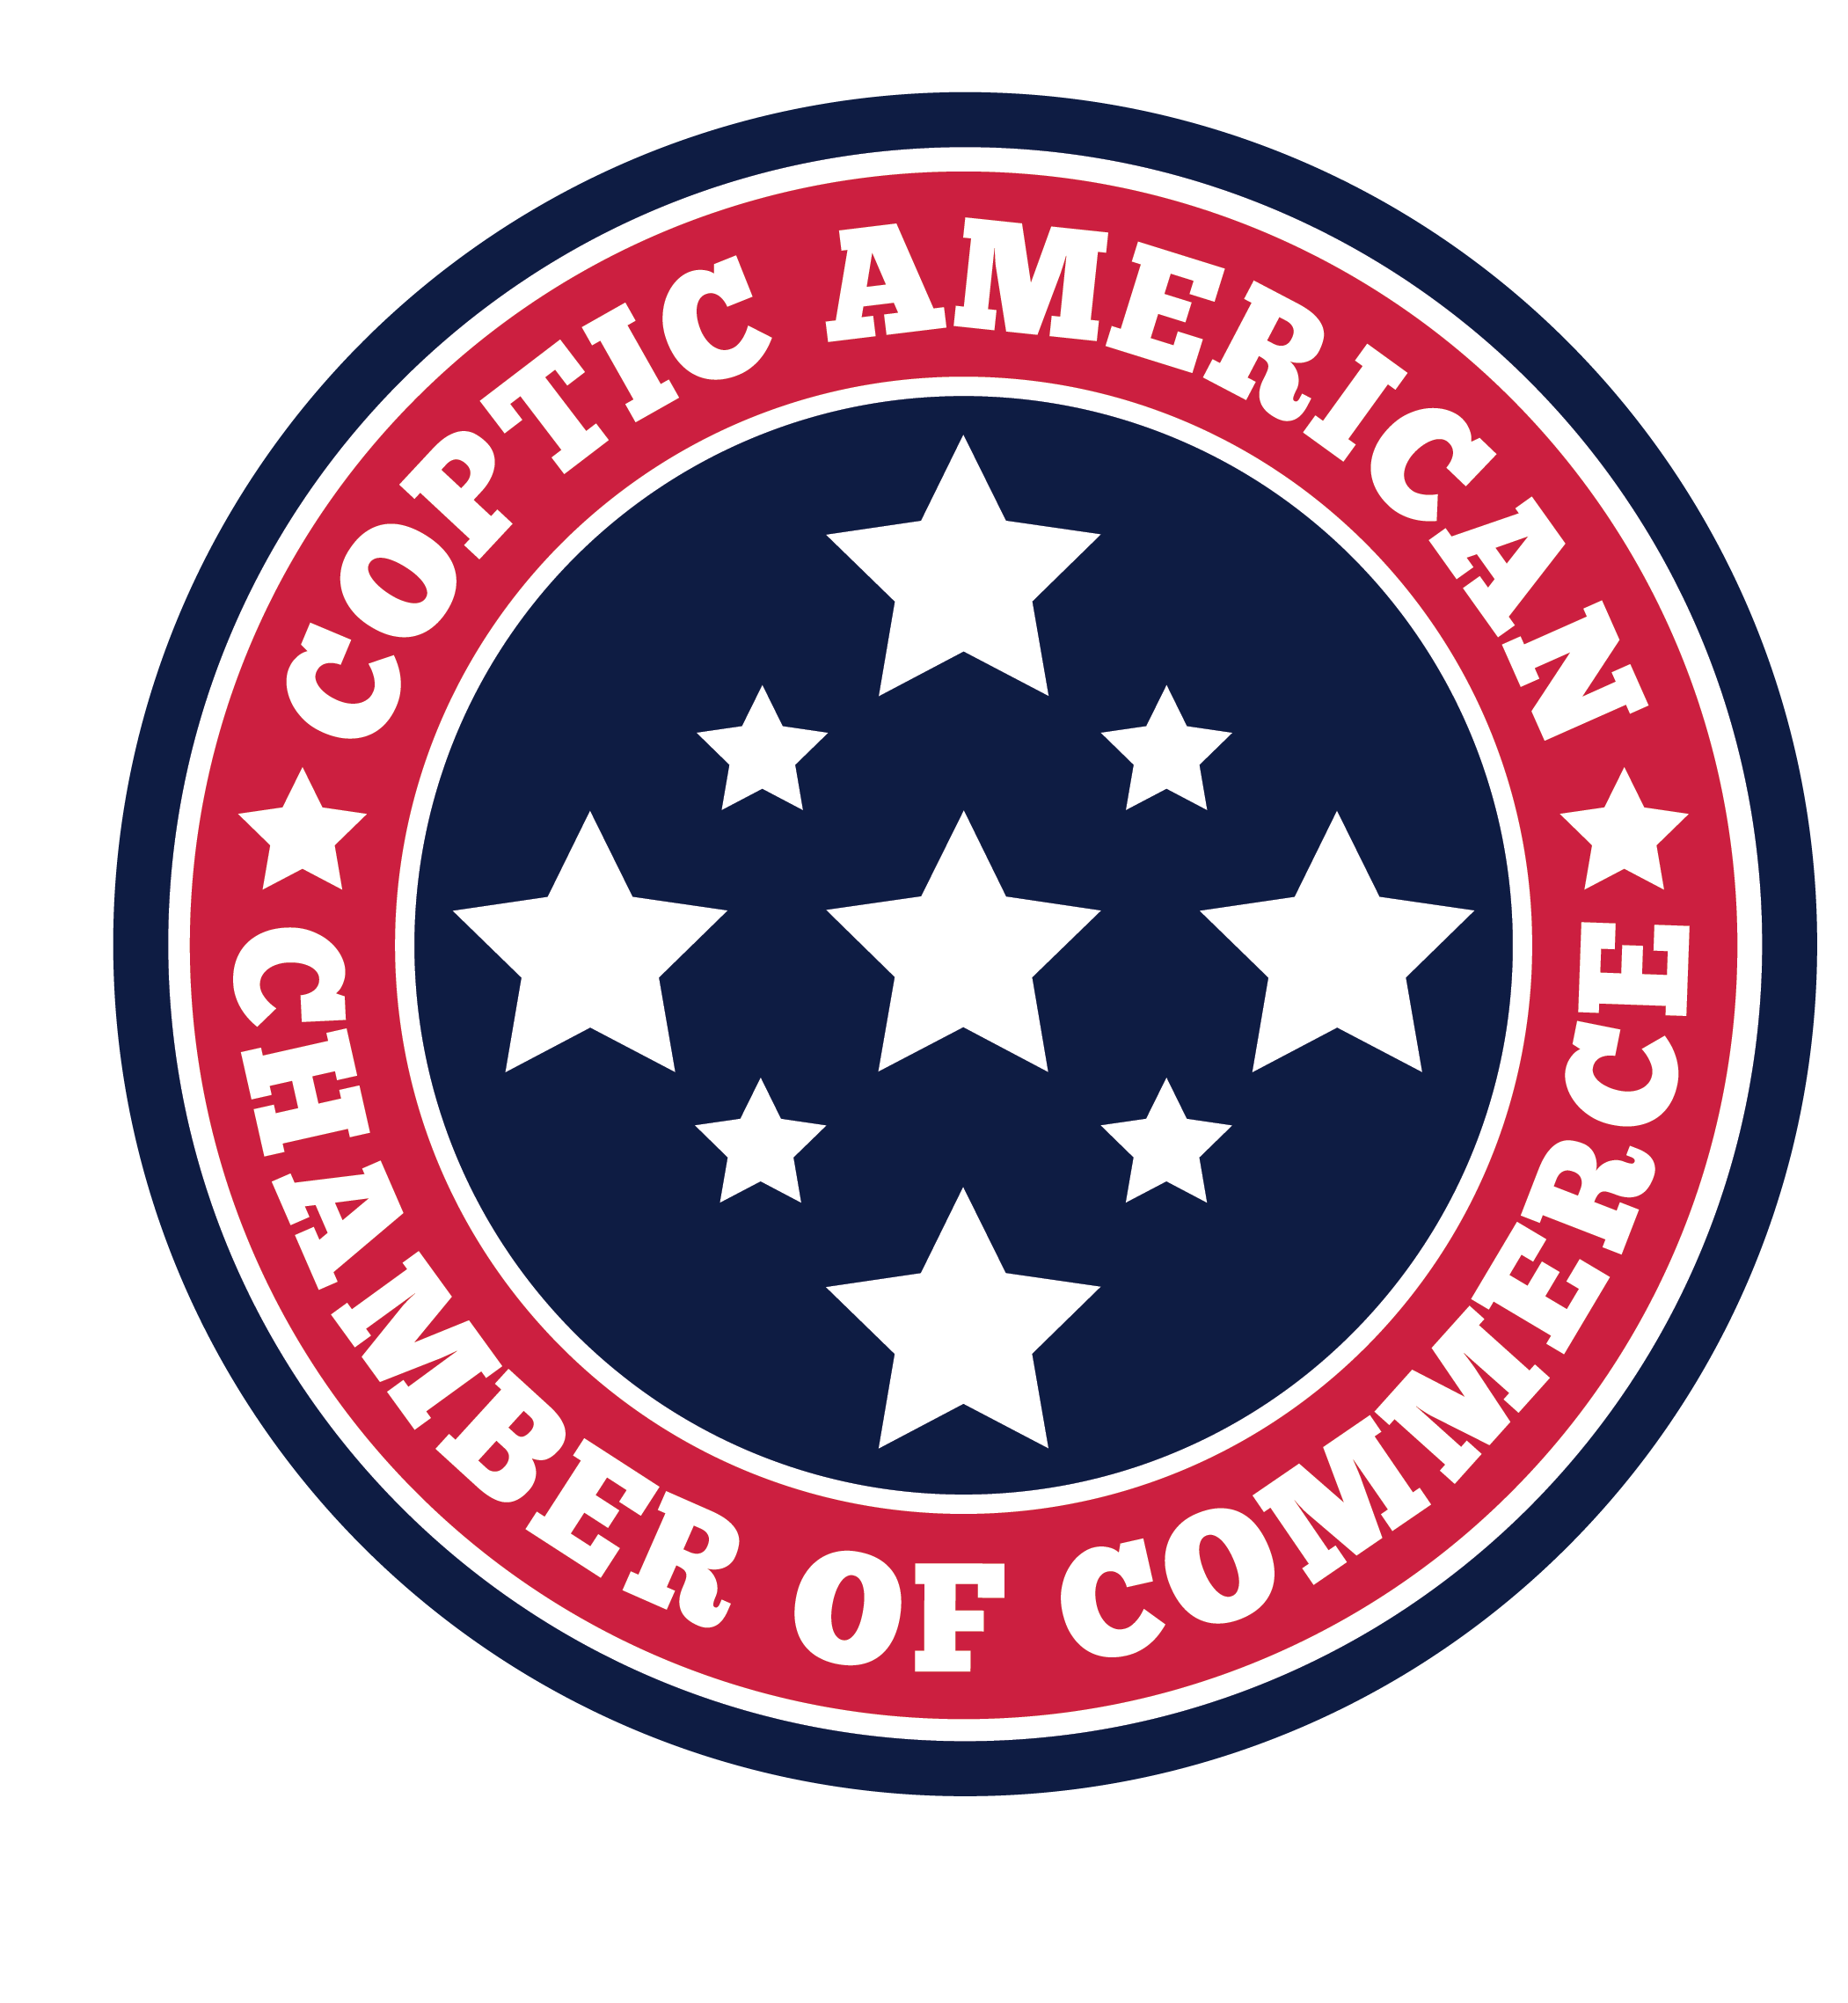 Coptic American Chamber of Commerce